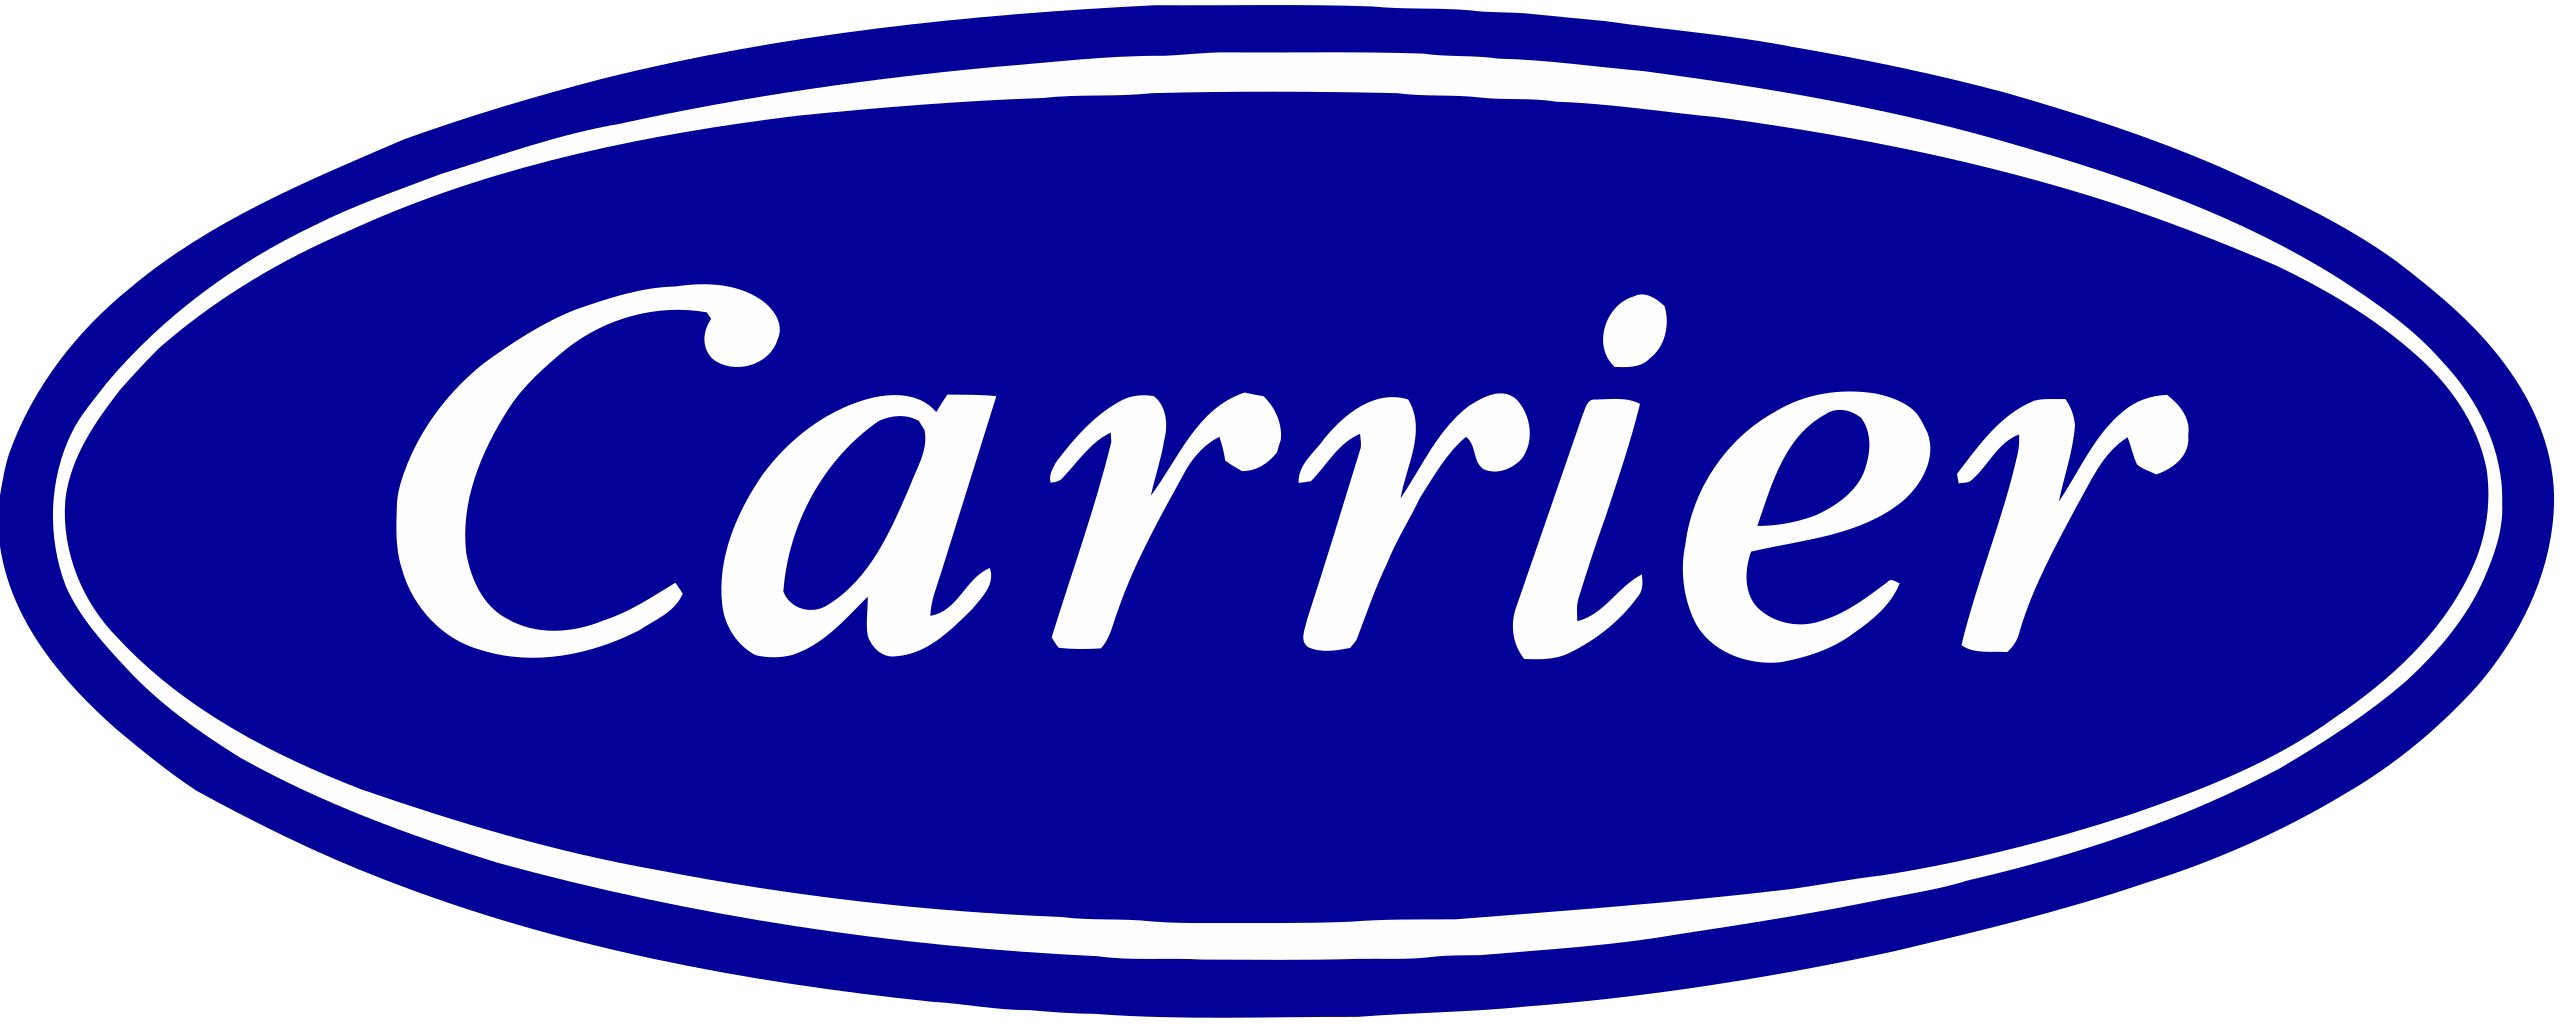 Carrier Corporation Logo